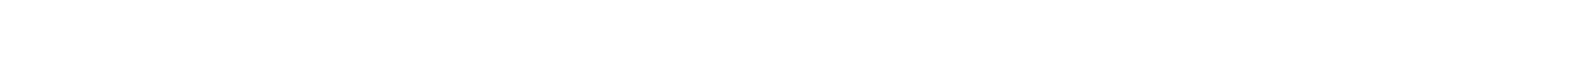 Central Securities Logo groß für dunkle Hintergründe (transparentes PNG)